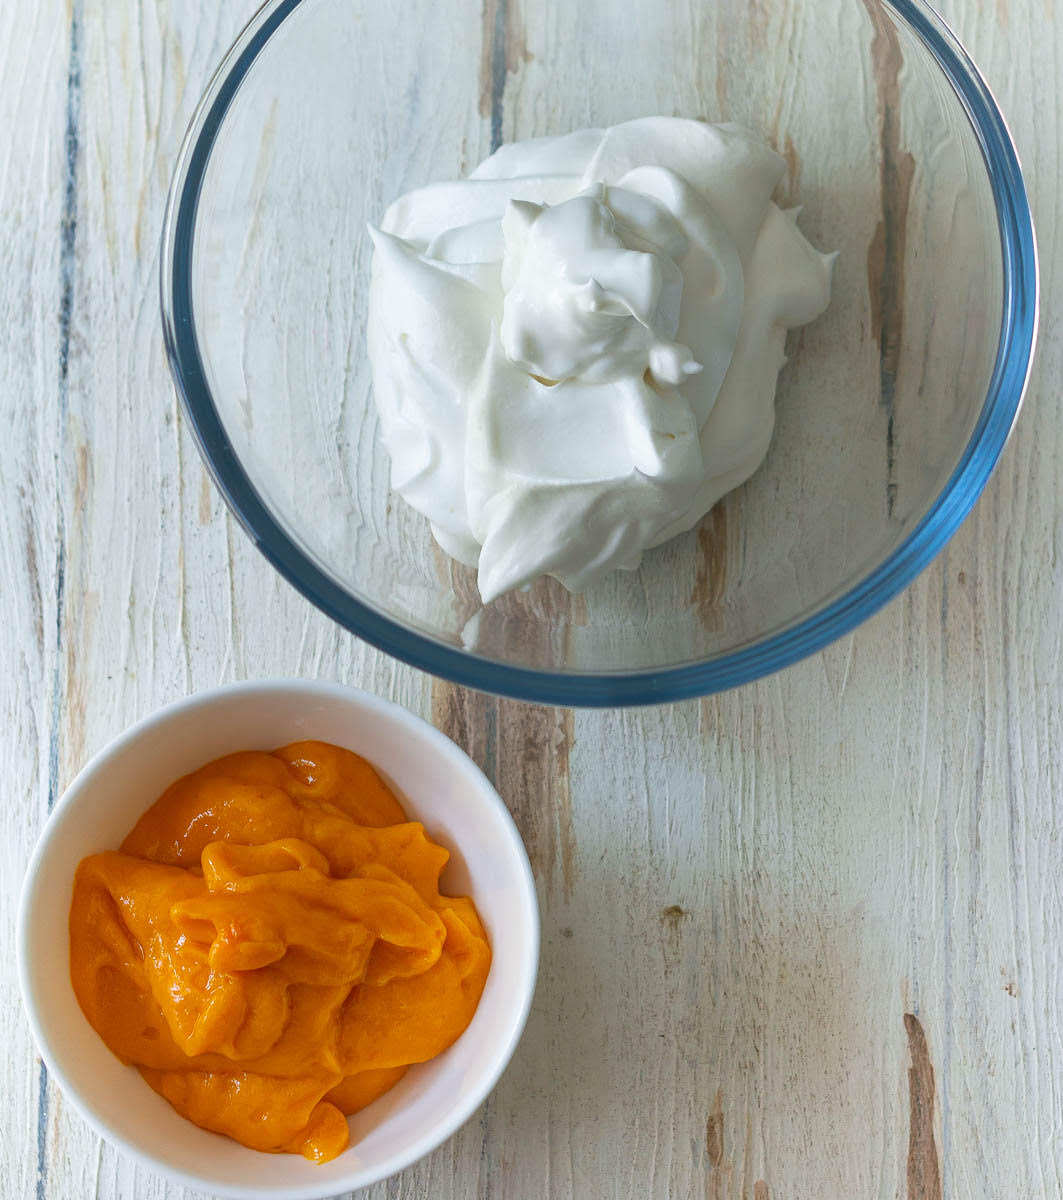 Whipped cream and mango puree